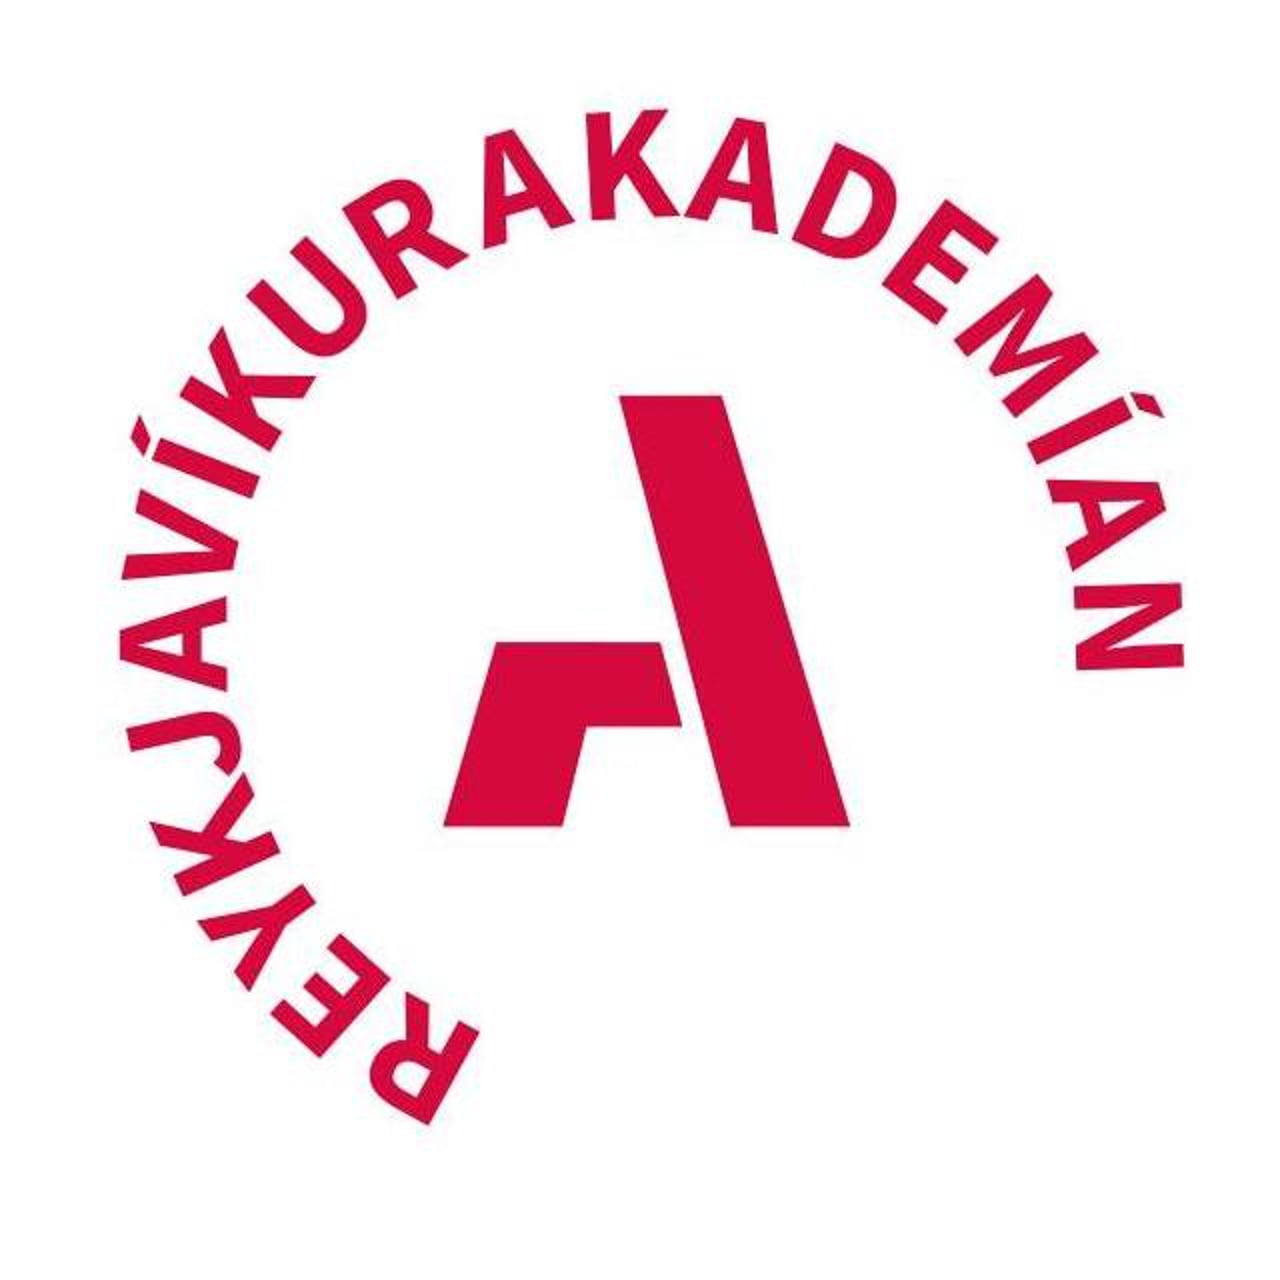 Málþing; fjölmiðlun í almannaþágu. Dr. Gunn Enli – The Media Welfare State: Public Service Broadcasting in the Nordic Region